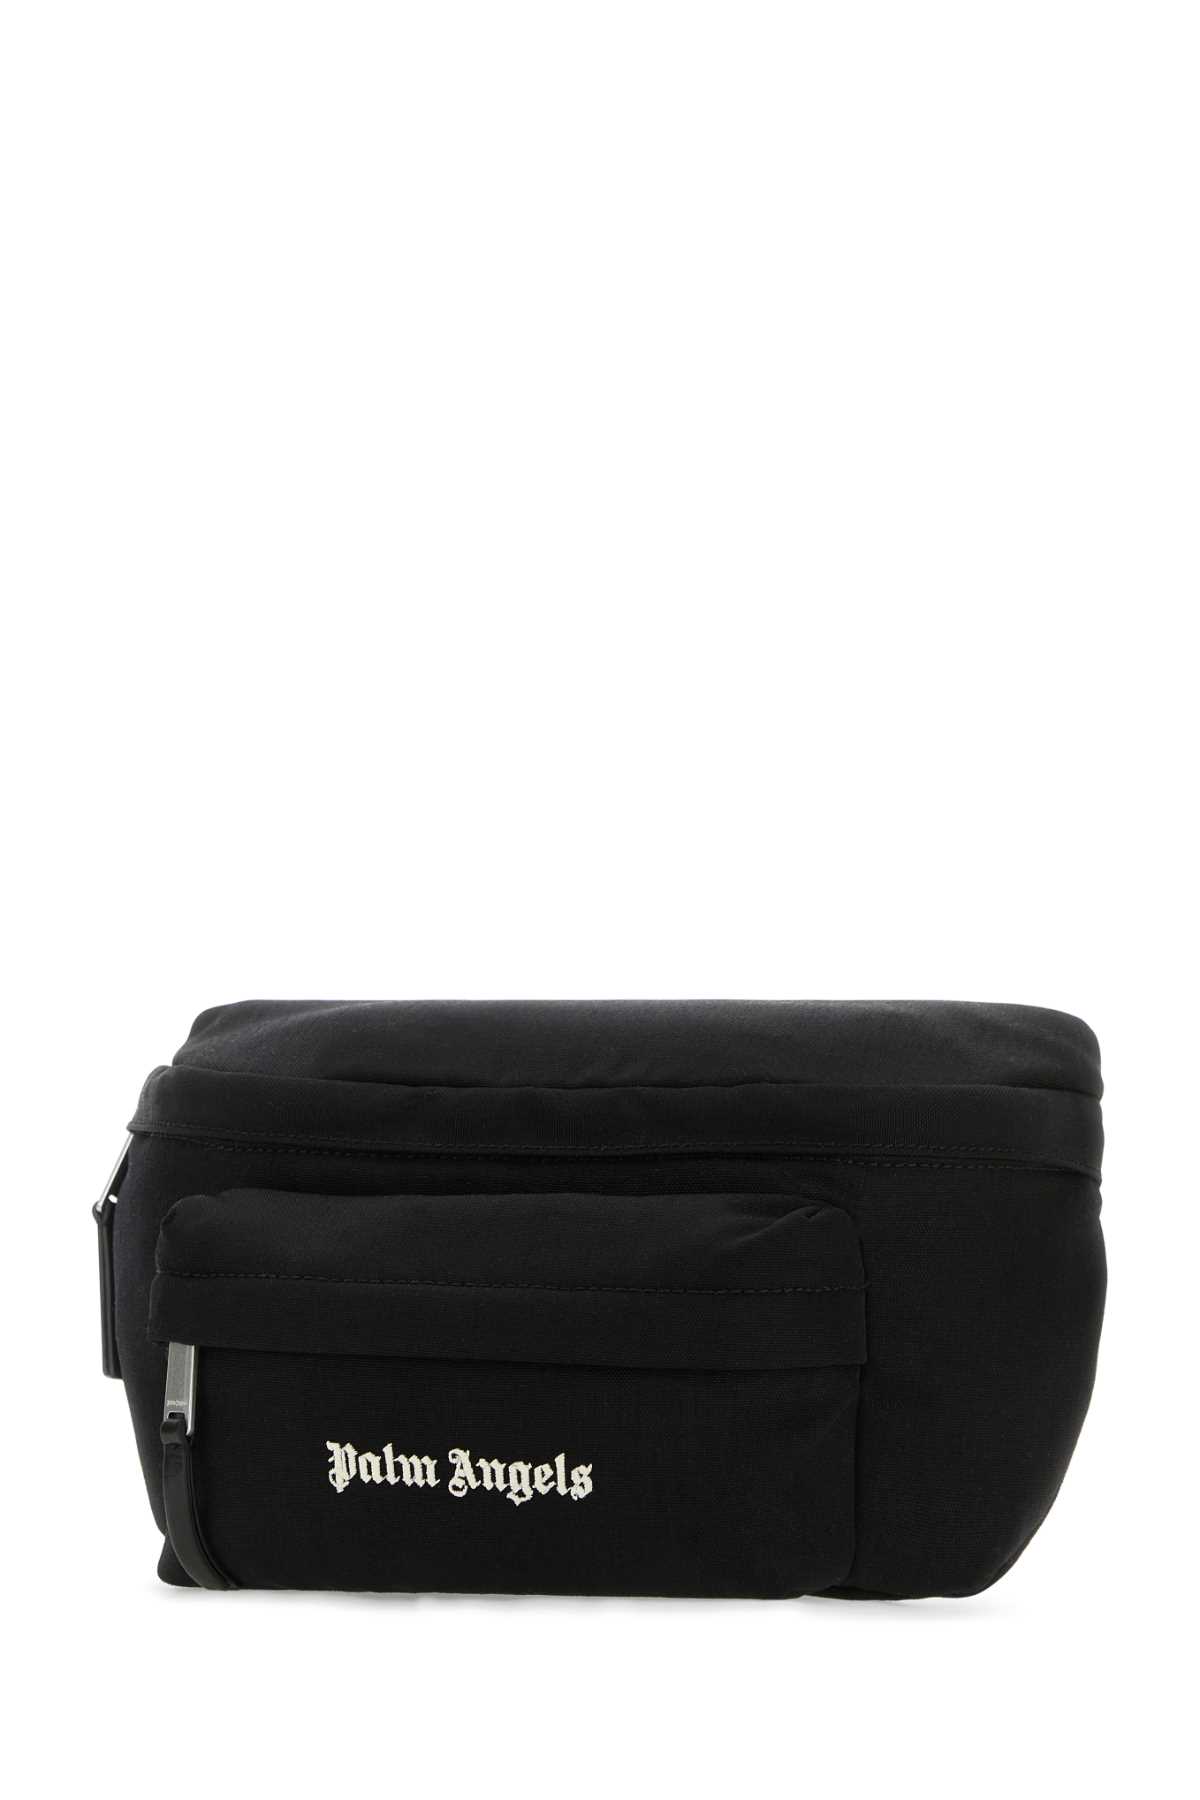 Palm Angels Black Canvas Belt Bag In Blackwhit